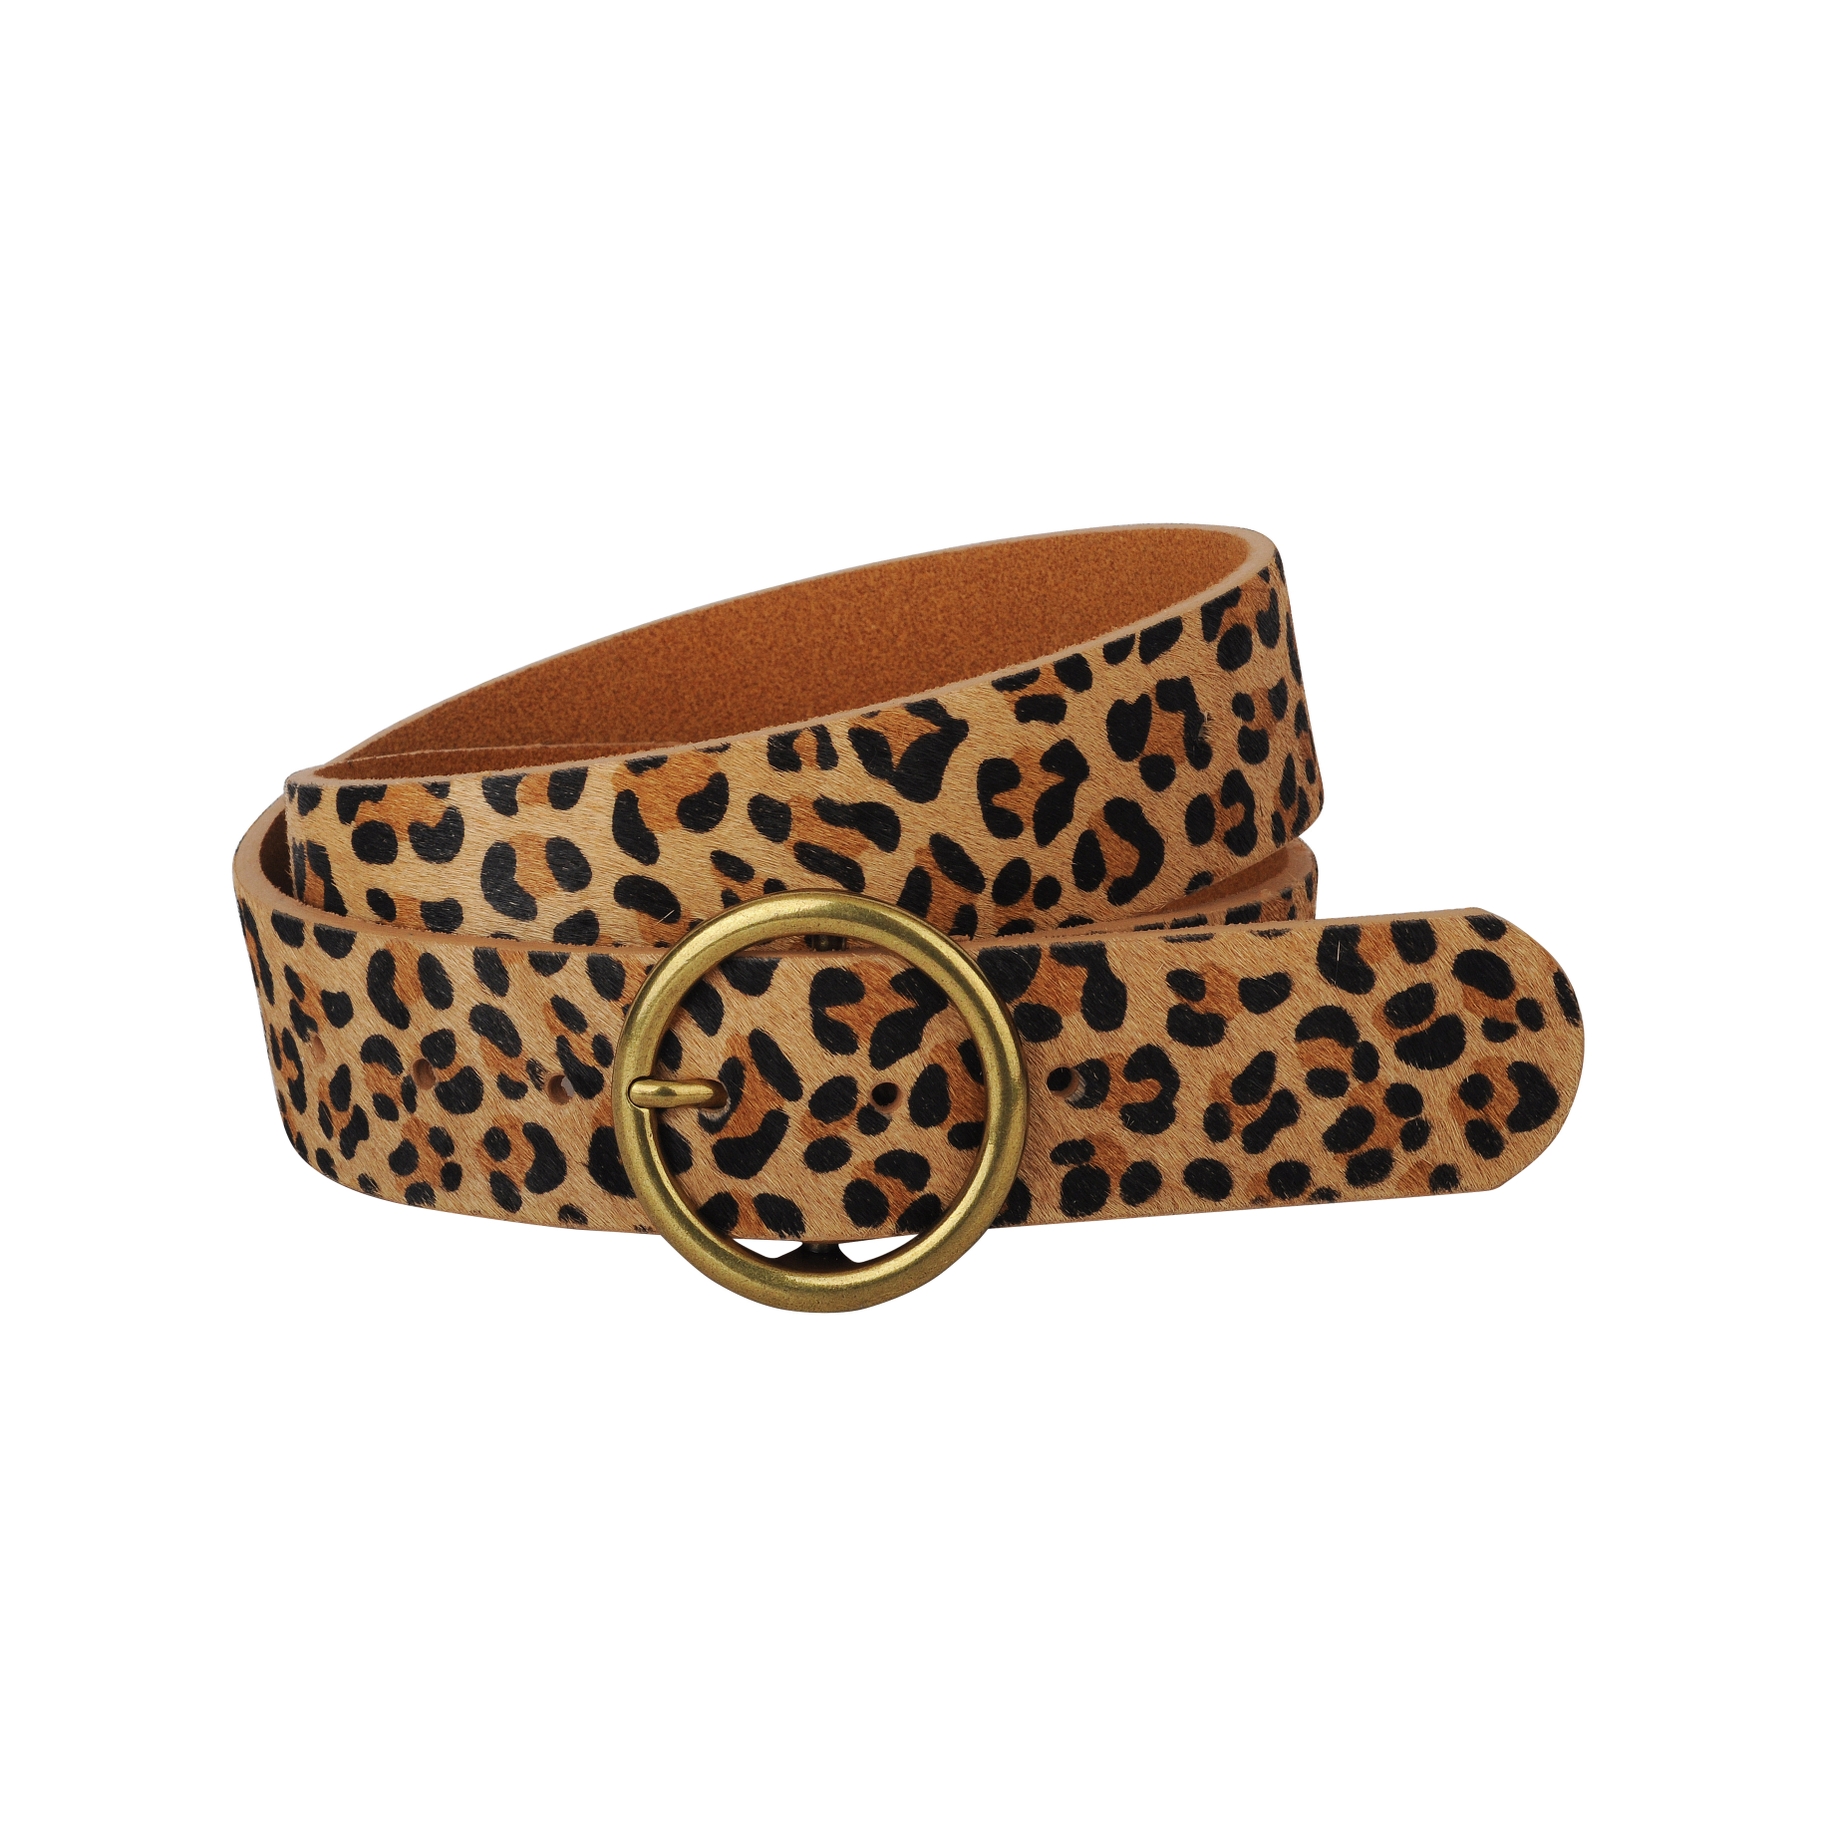 Leopard Print Calf Hair Leather Belt